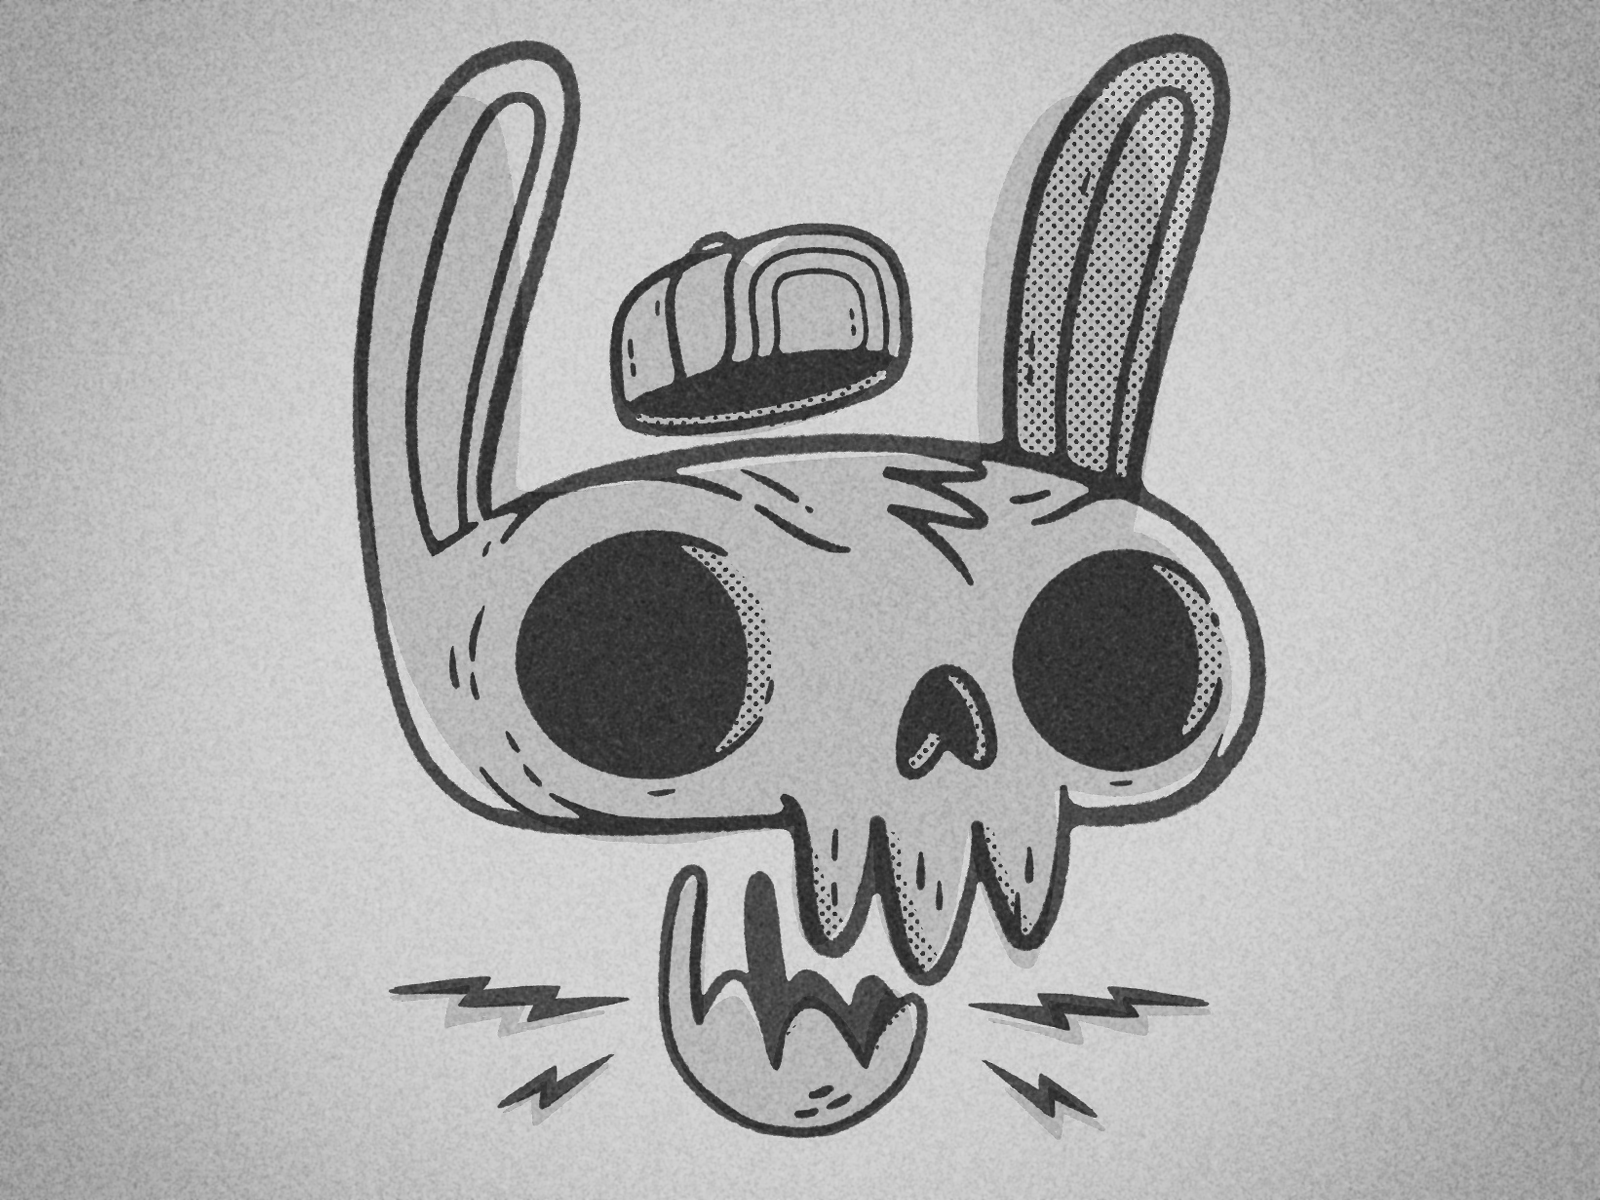 Steamboat (Skull) Bunny by Jetpacks and Rollerskates on Dribbble